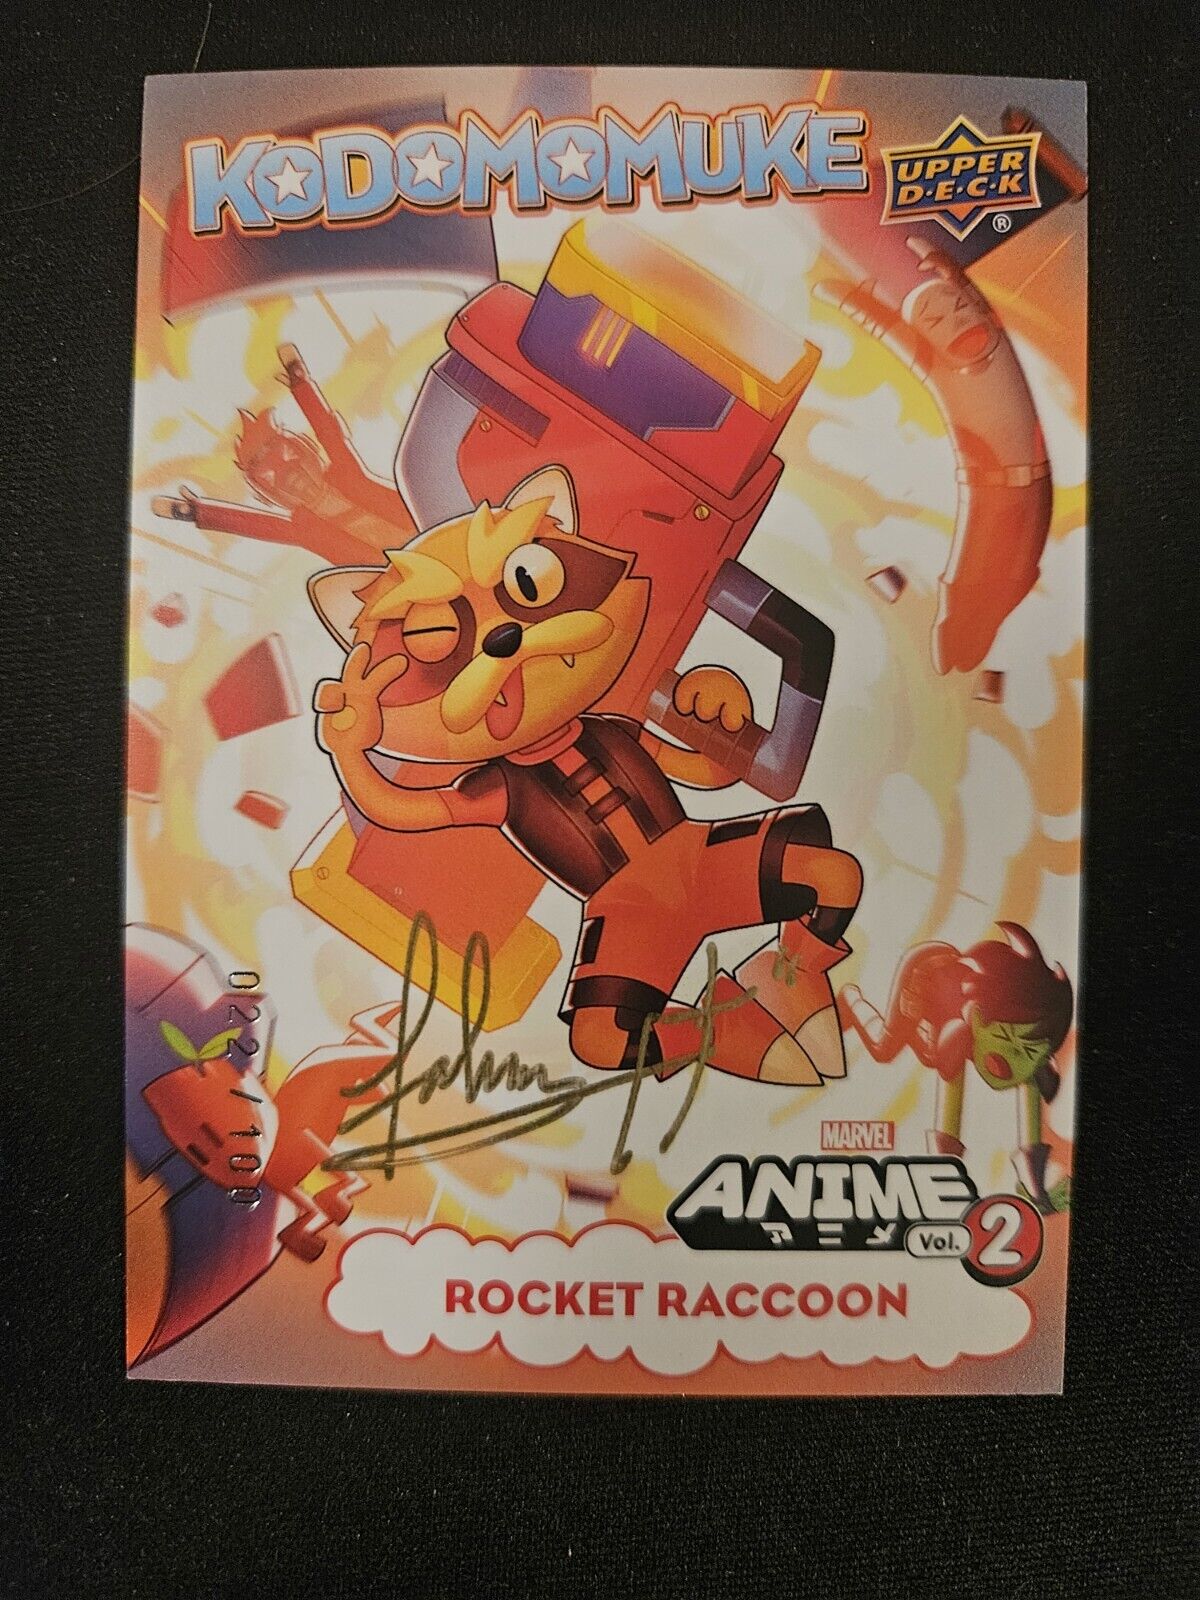 2023 Marvel Anime Vol 2 Rocket Raccoon Kodomomuke Gold Asrtist Autograph #/100